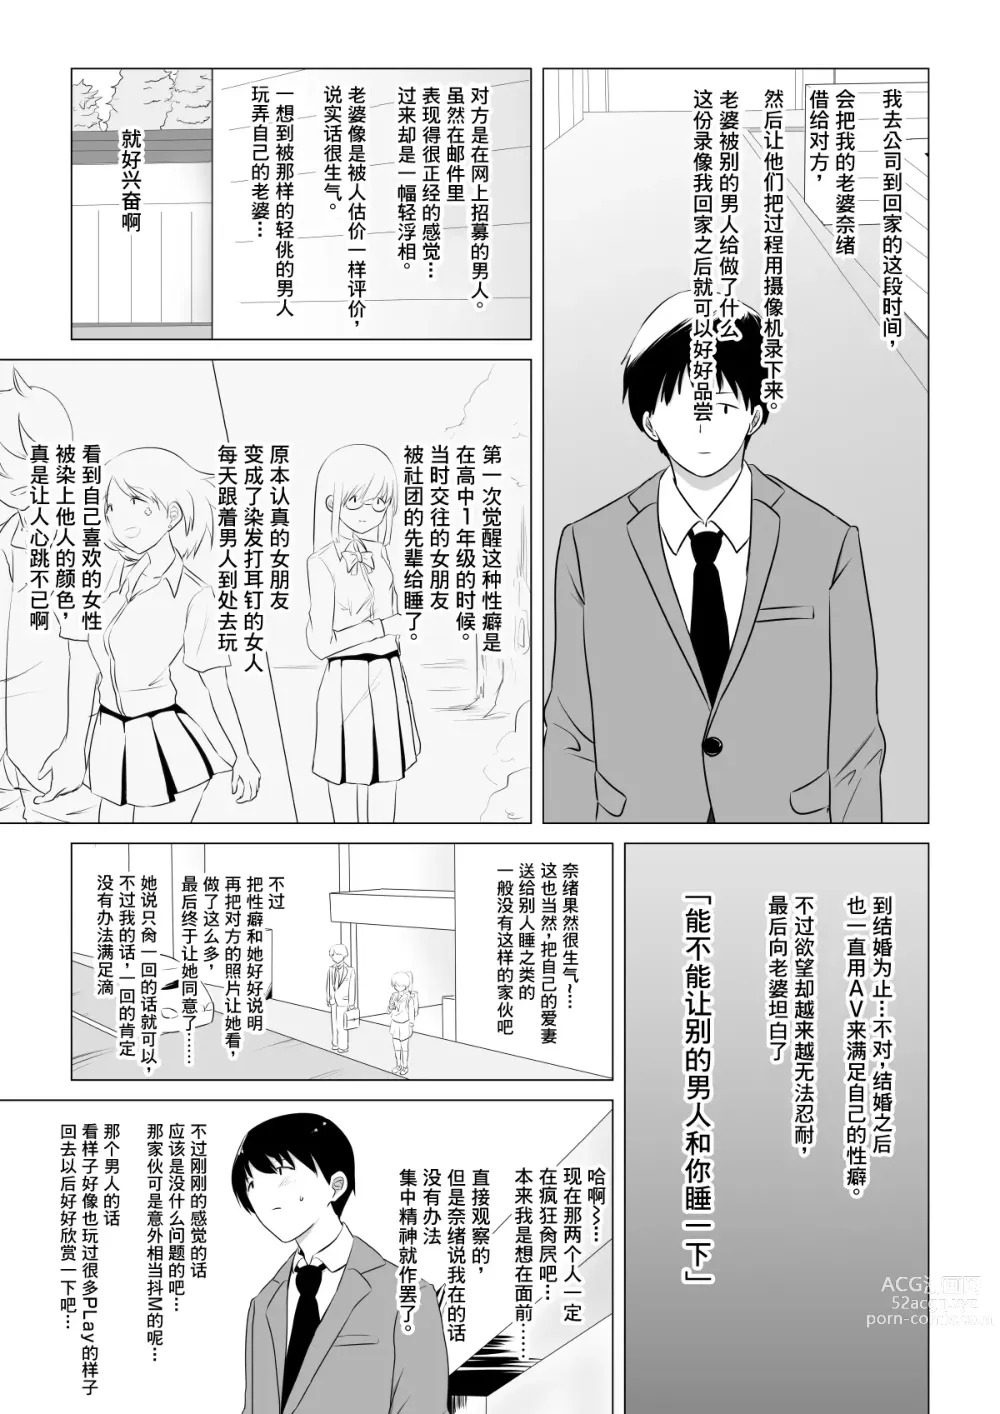 Page 7 of doujinshi 爱妻被绿事件簿